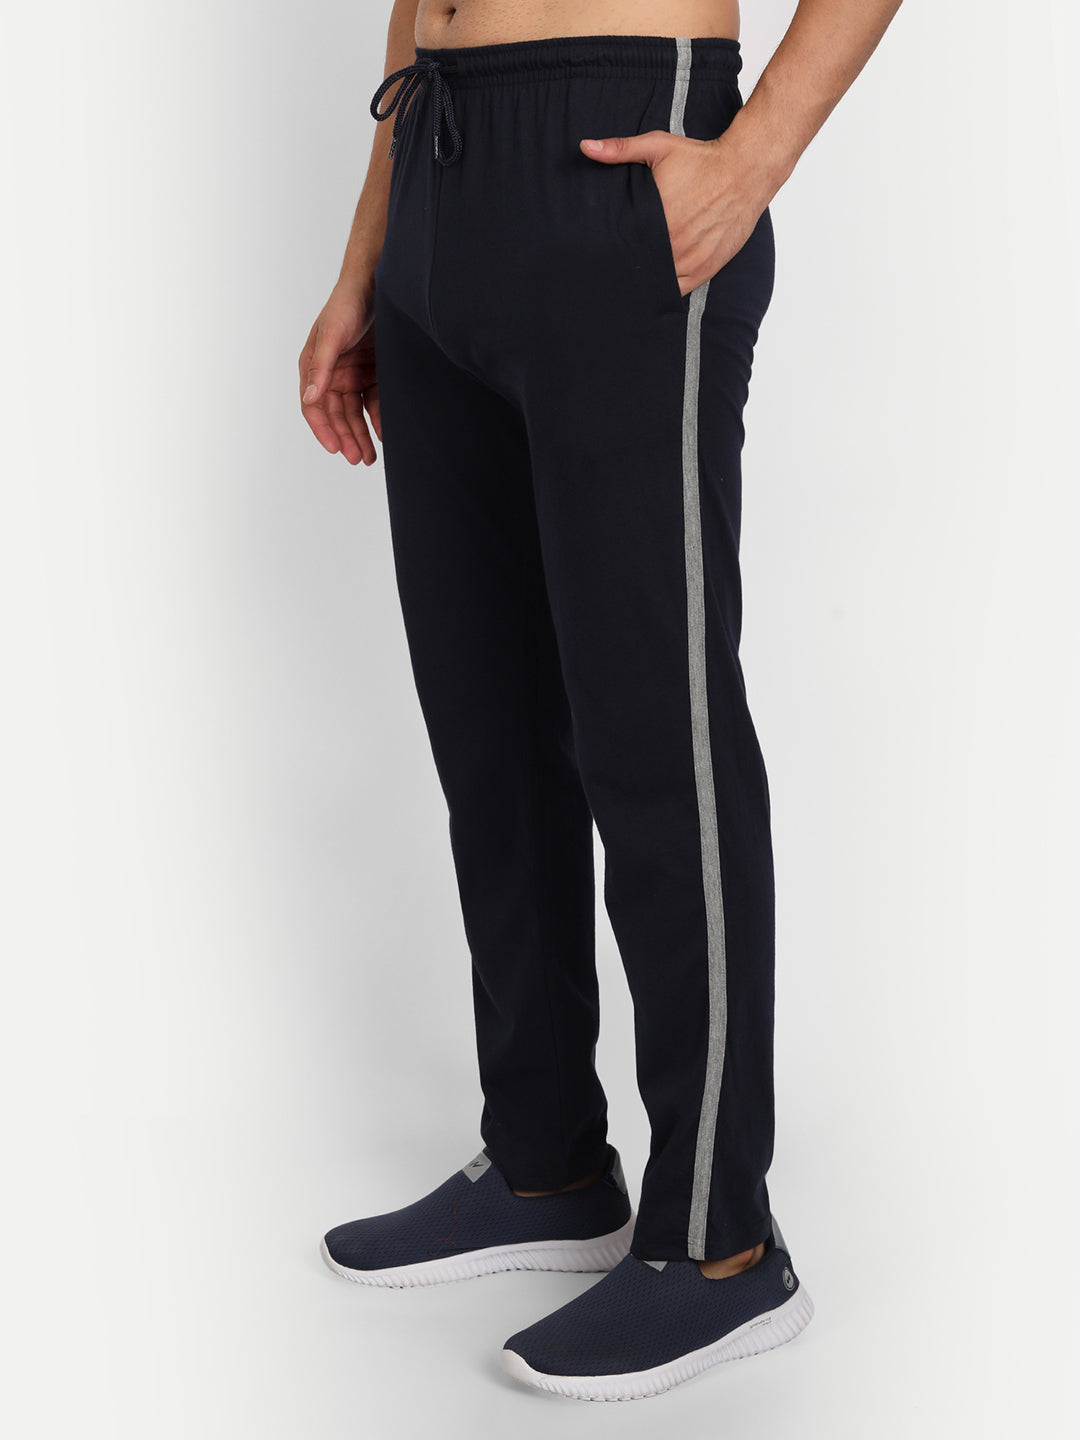 Buy Navy Blue Slim Fit Cotton Pants by Gentwithcom with Free Shipping   Slim fit cotton pants Pants Cotton pants